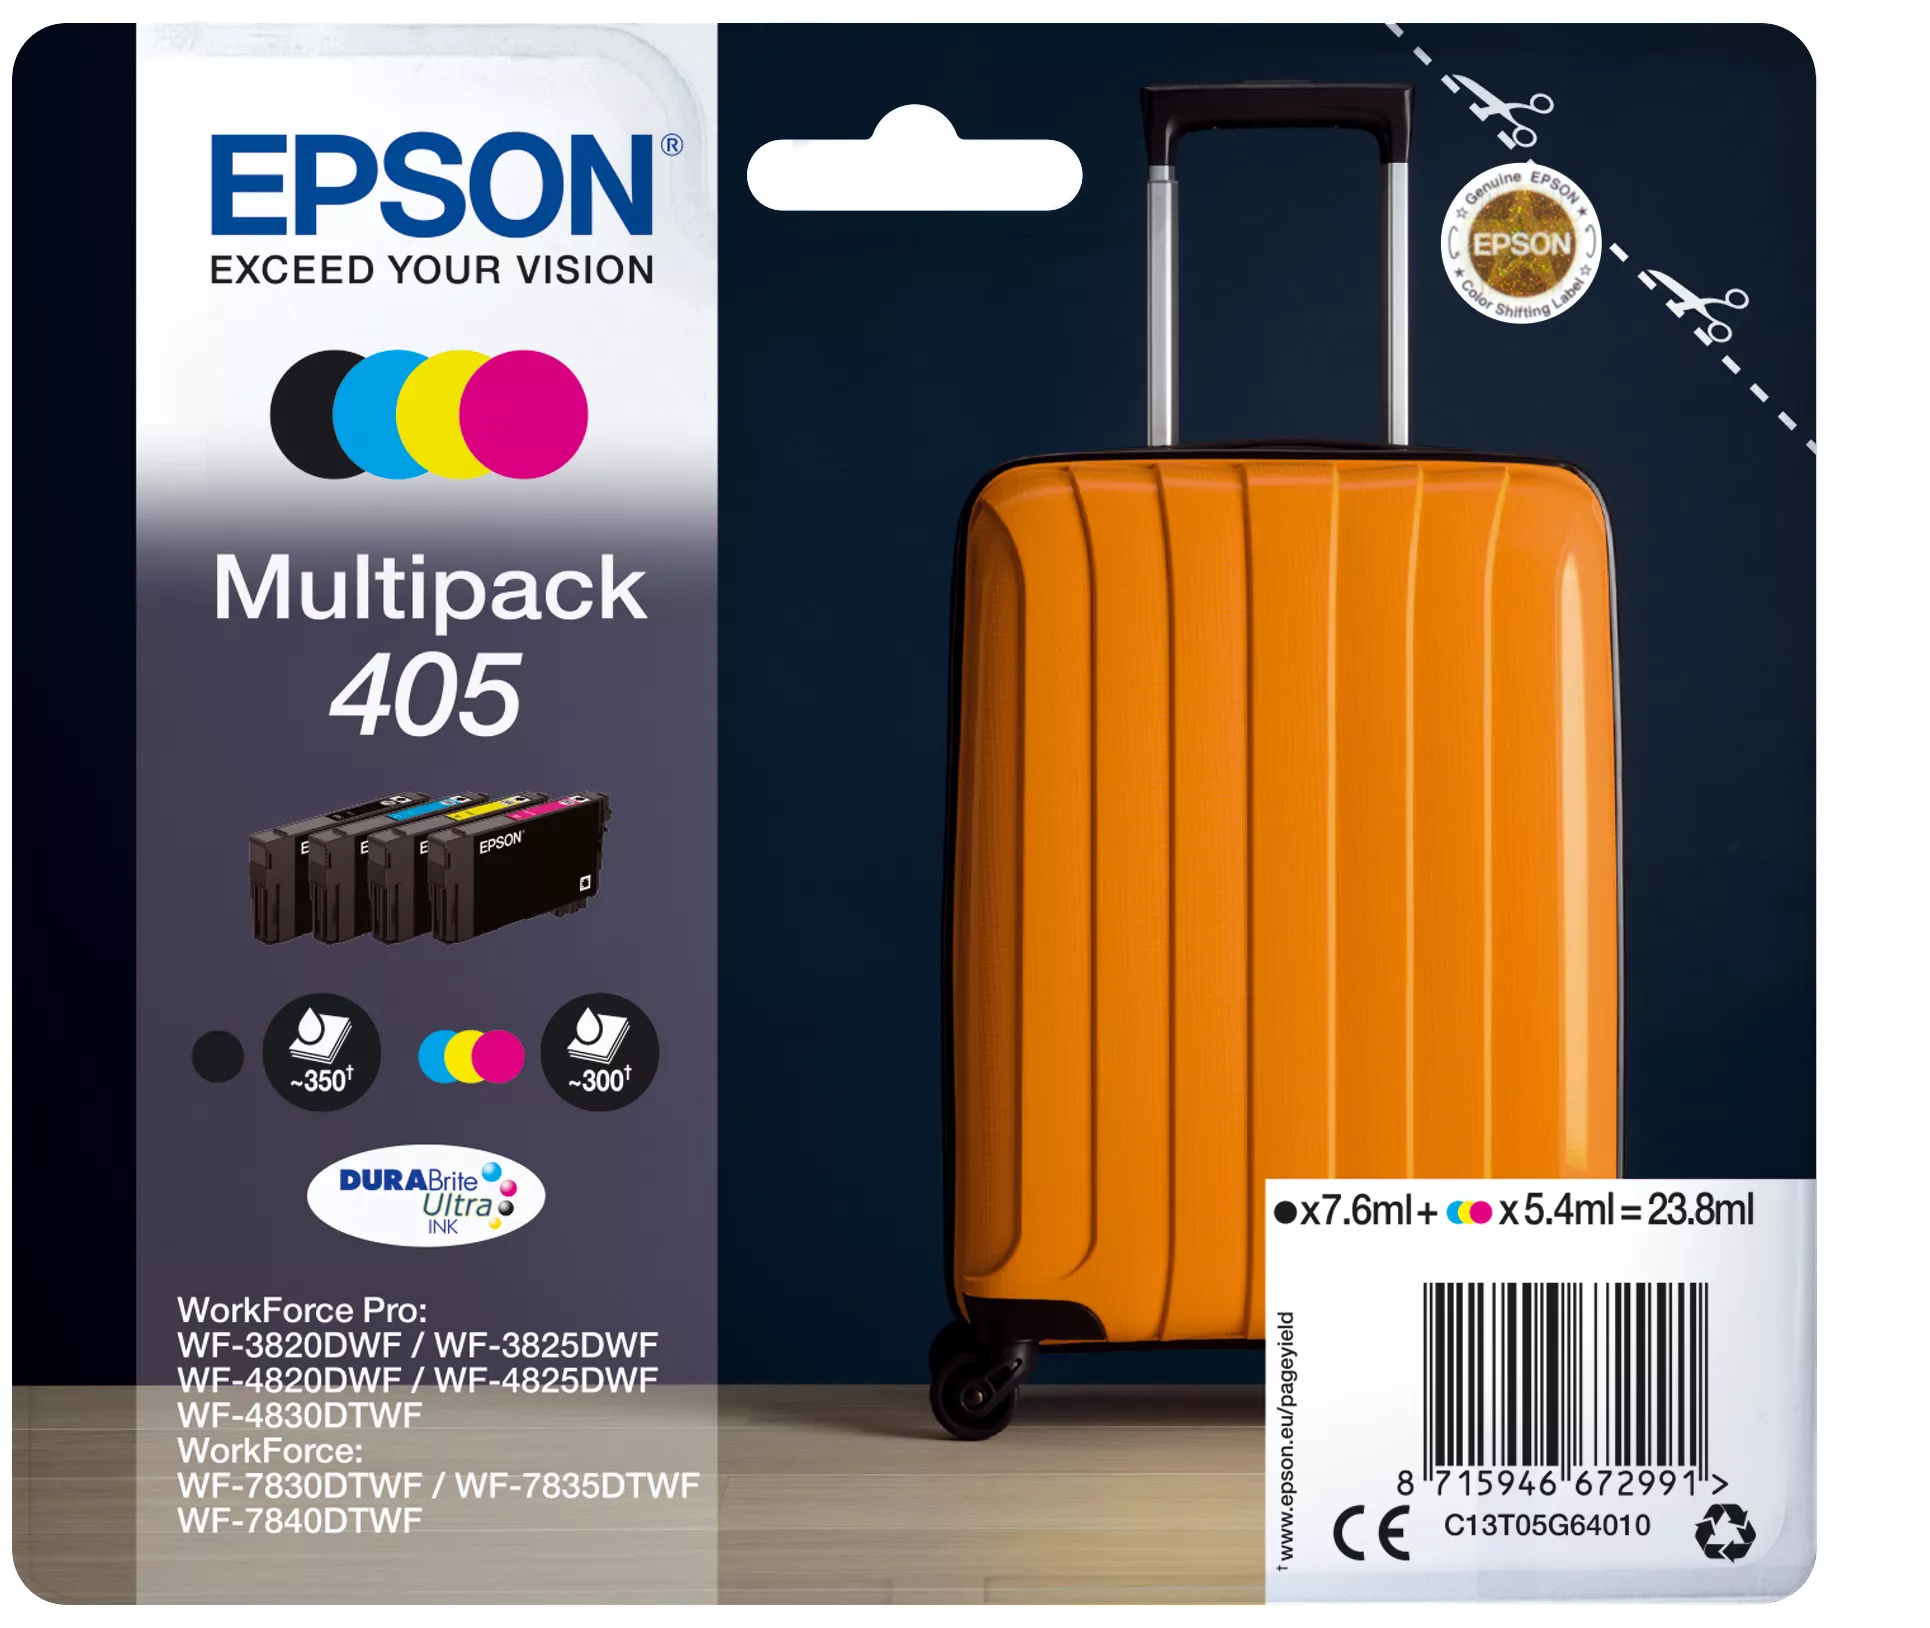 Vente EPSON Multipack 4-colours 405 DURABrite Ultra Ink au meilleur prix